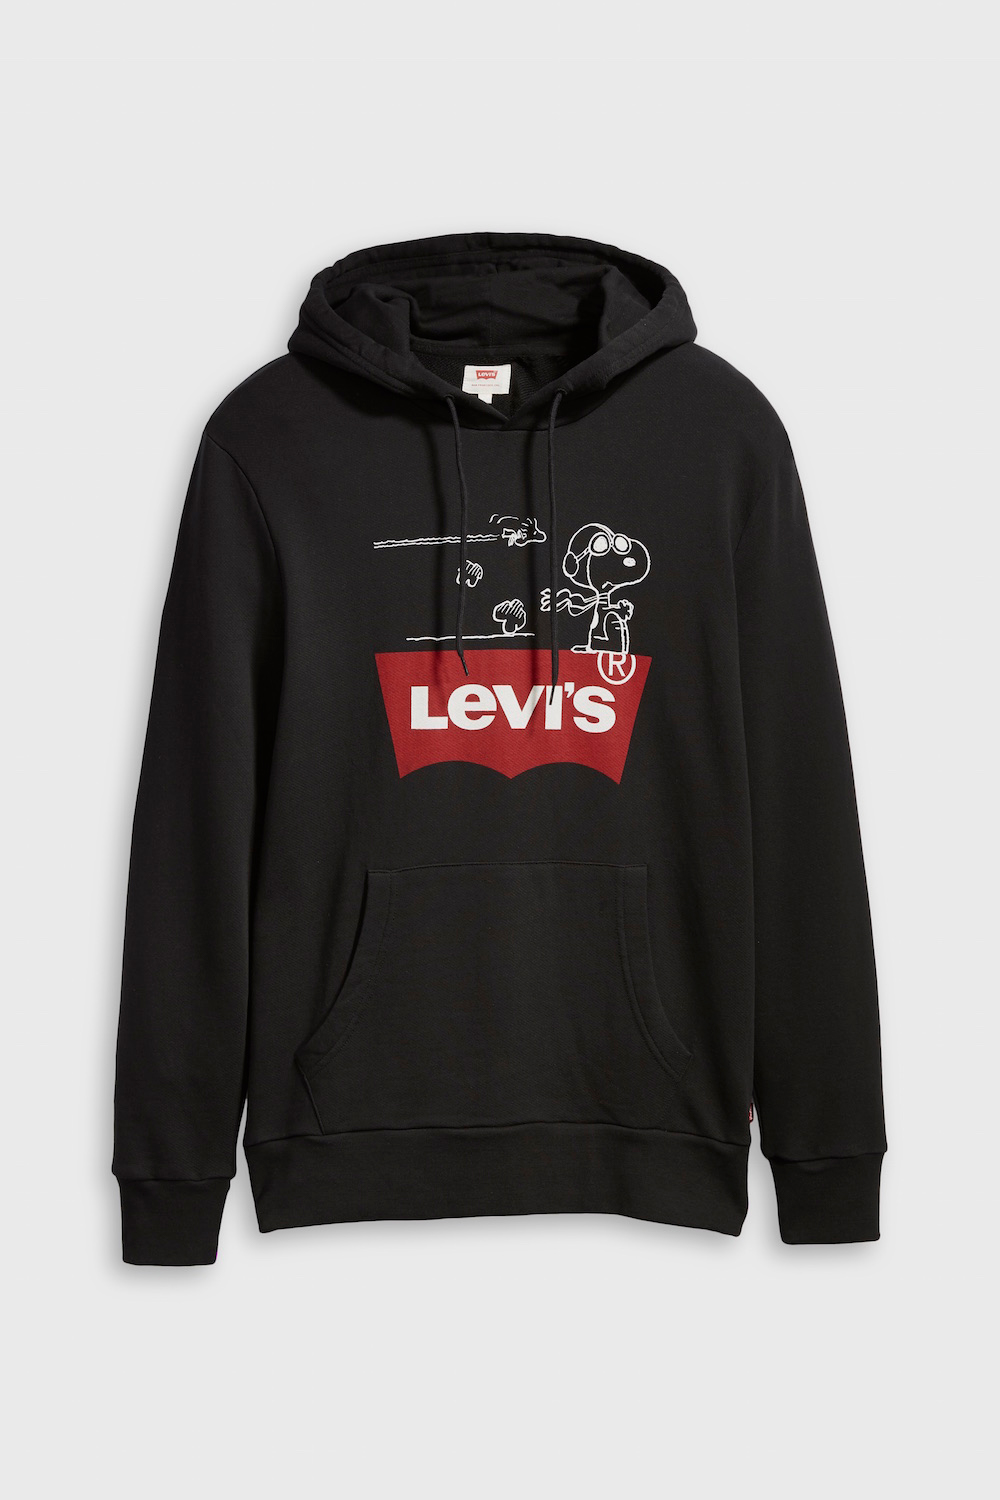 levis peanuts spring 2019 Levi's